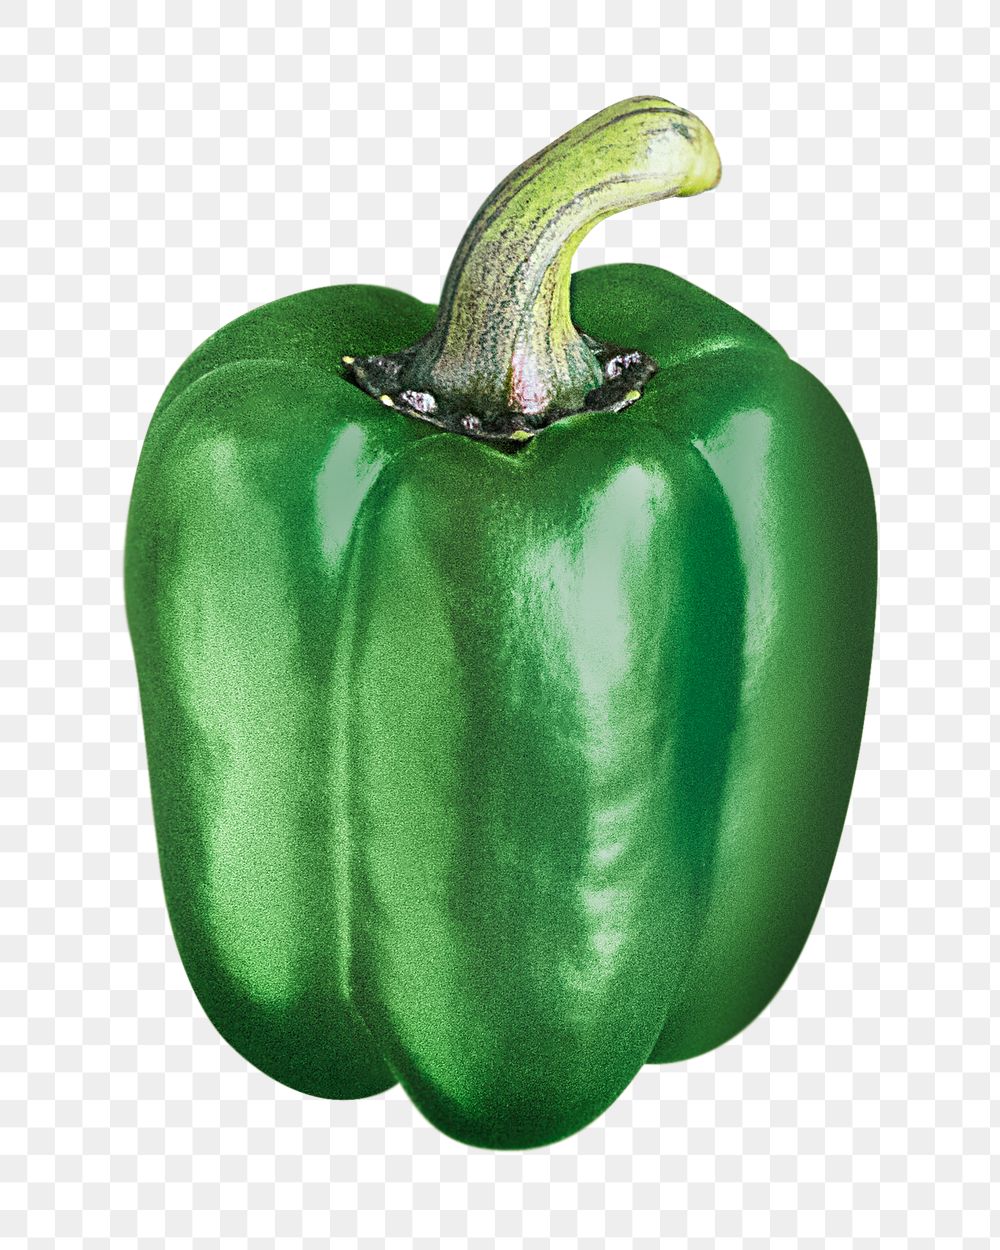 Green bell pepper png sticker, transparent background